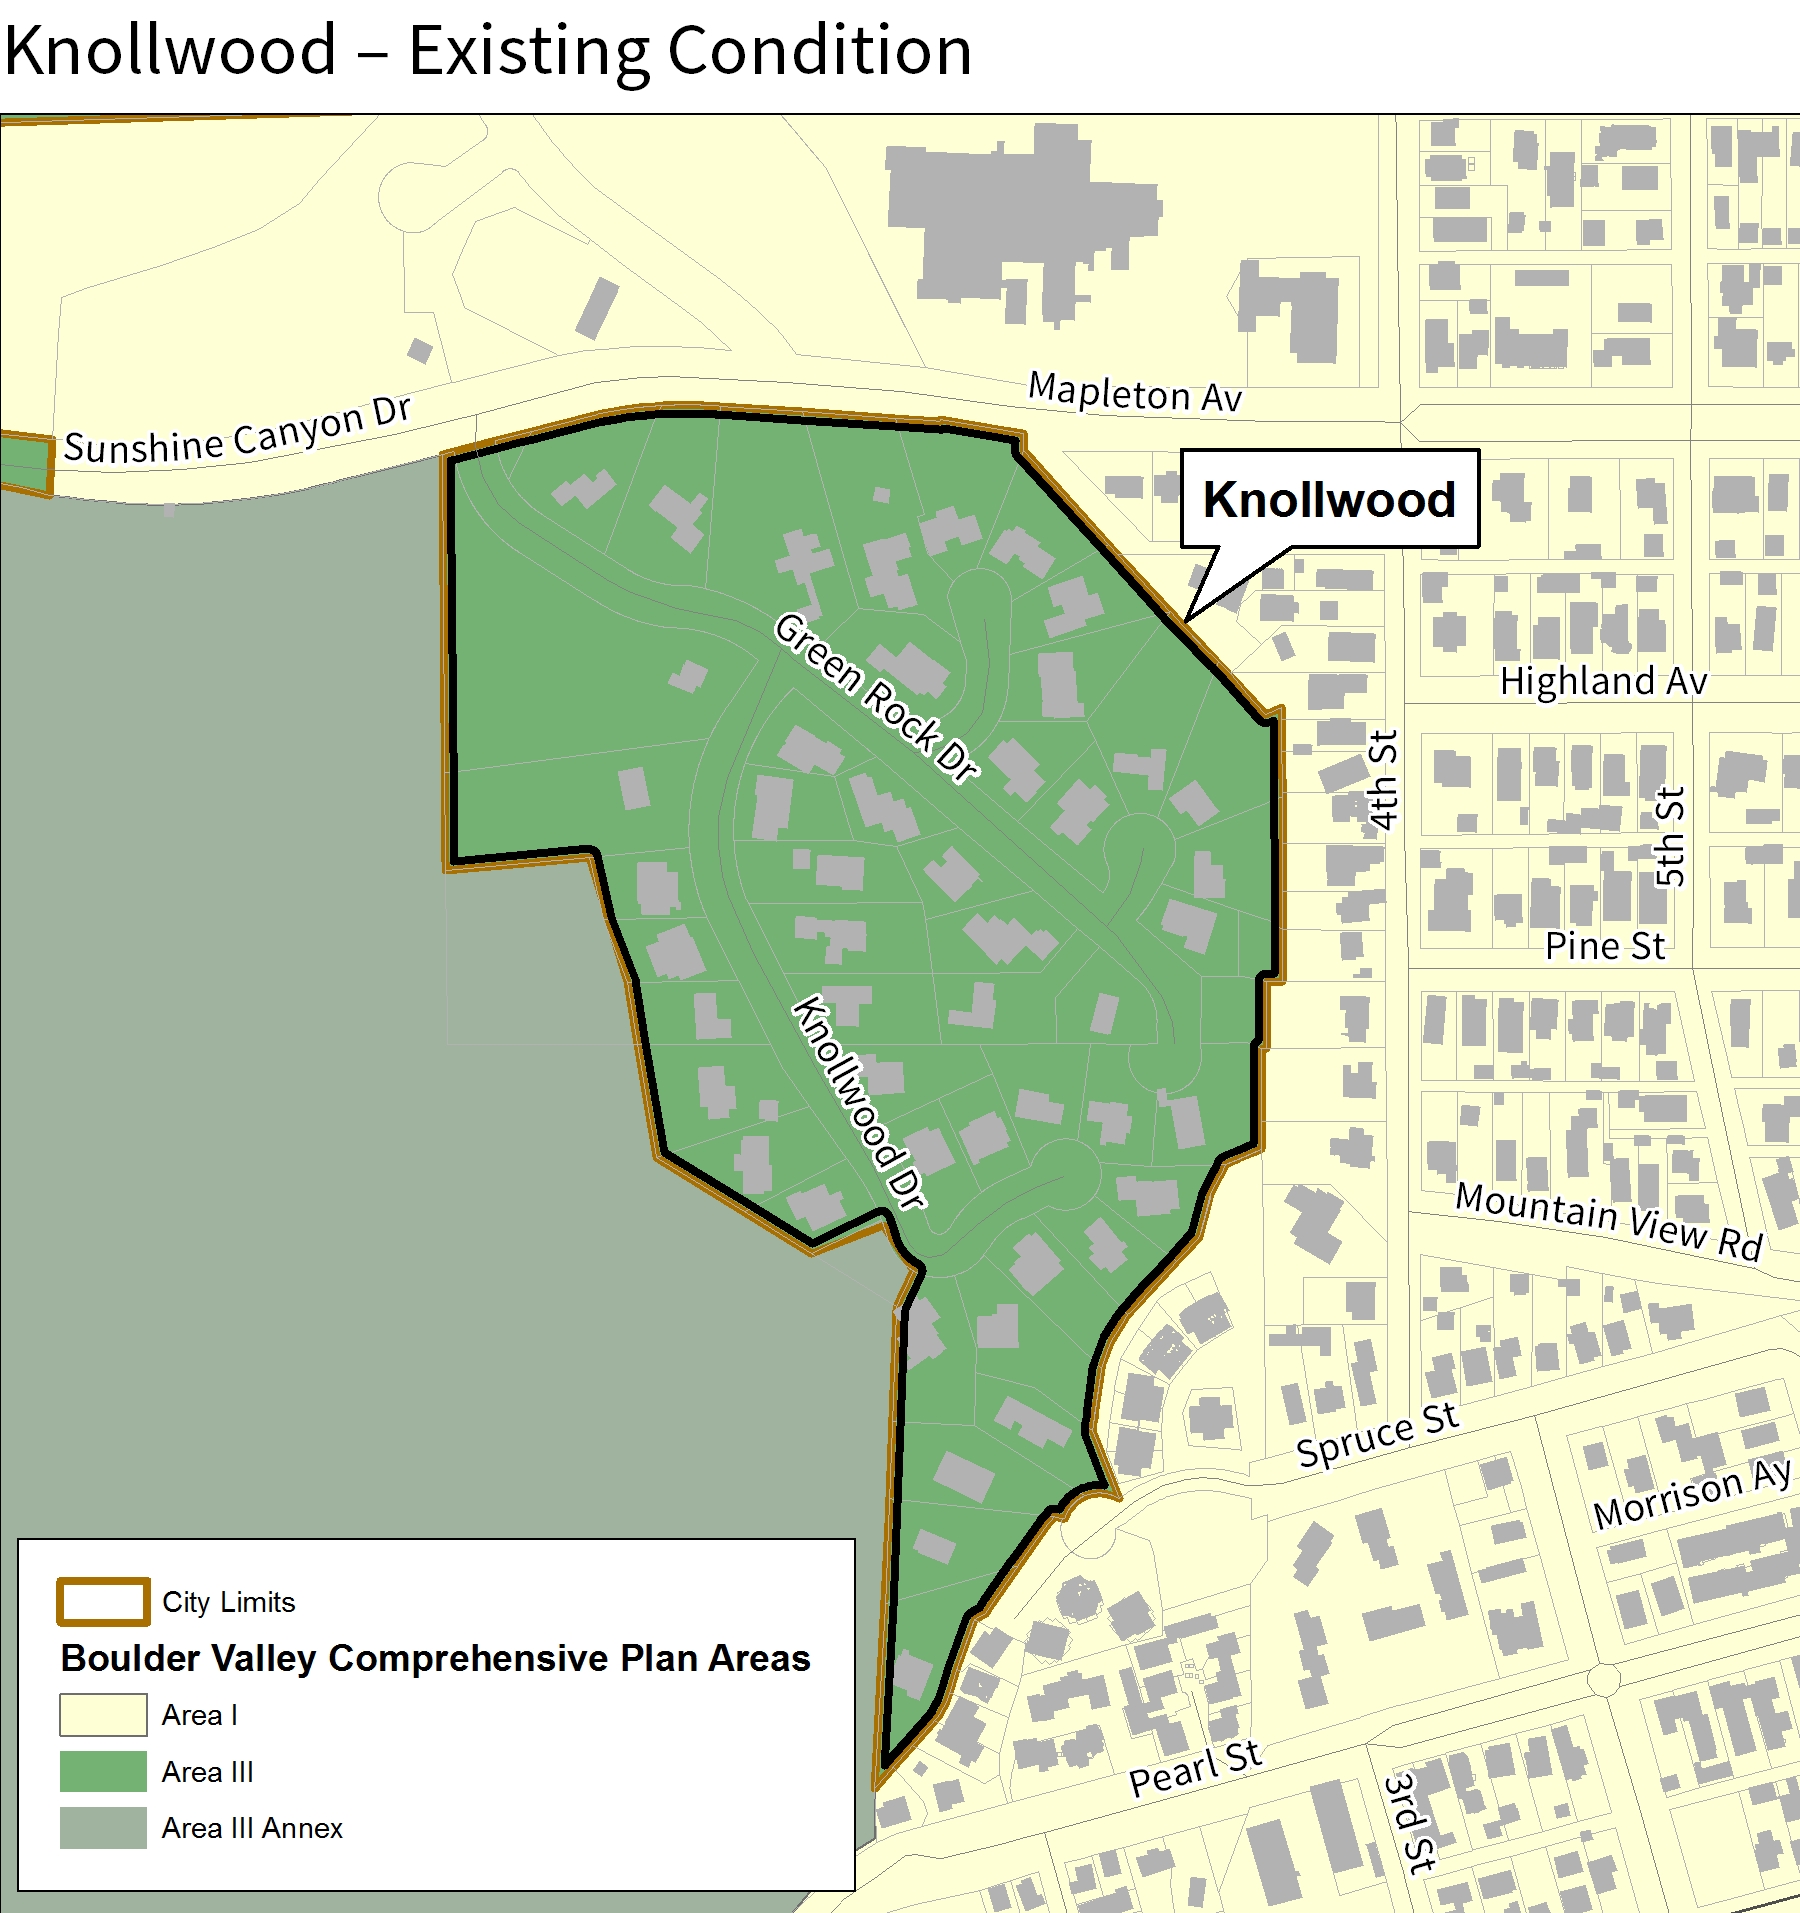 Existing Planning Area Designation: Area III – Rural Preservation